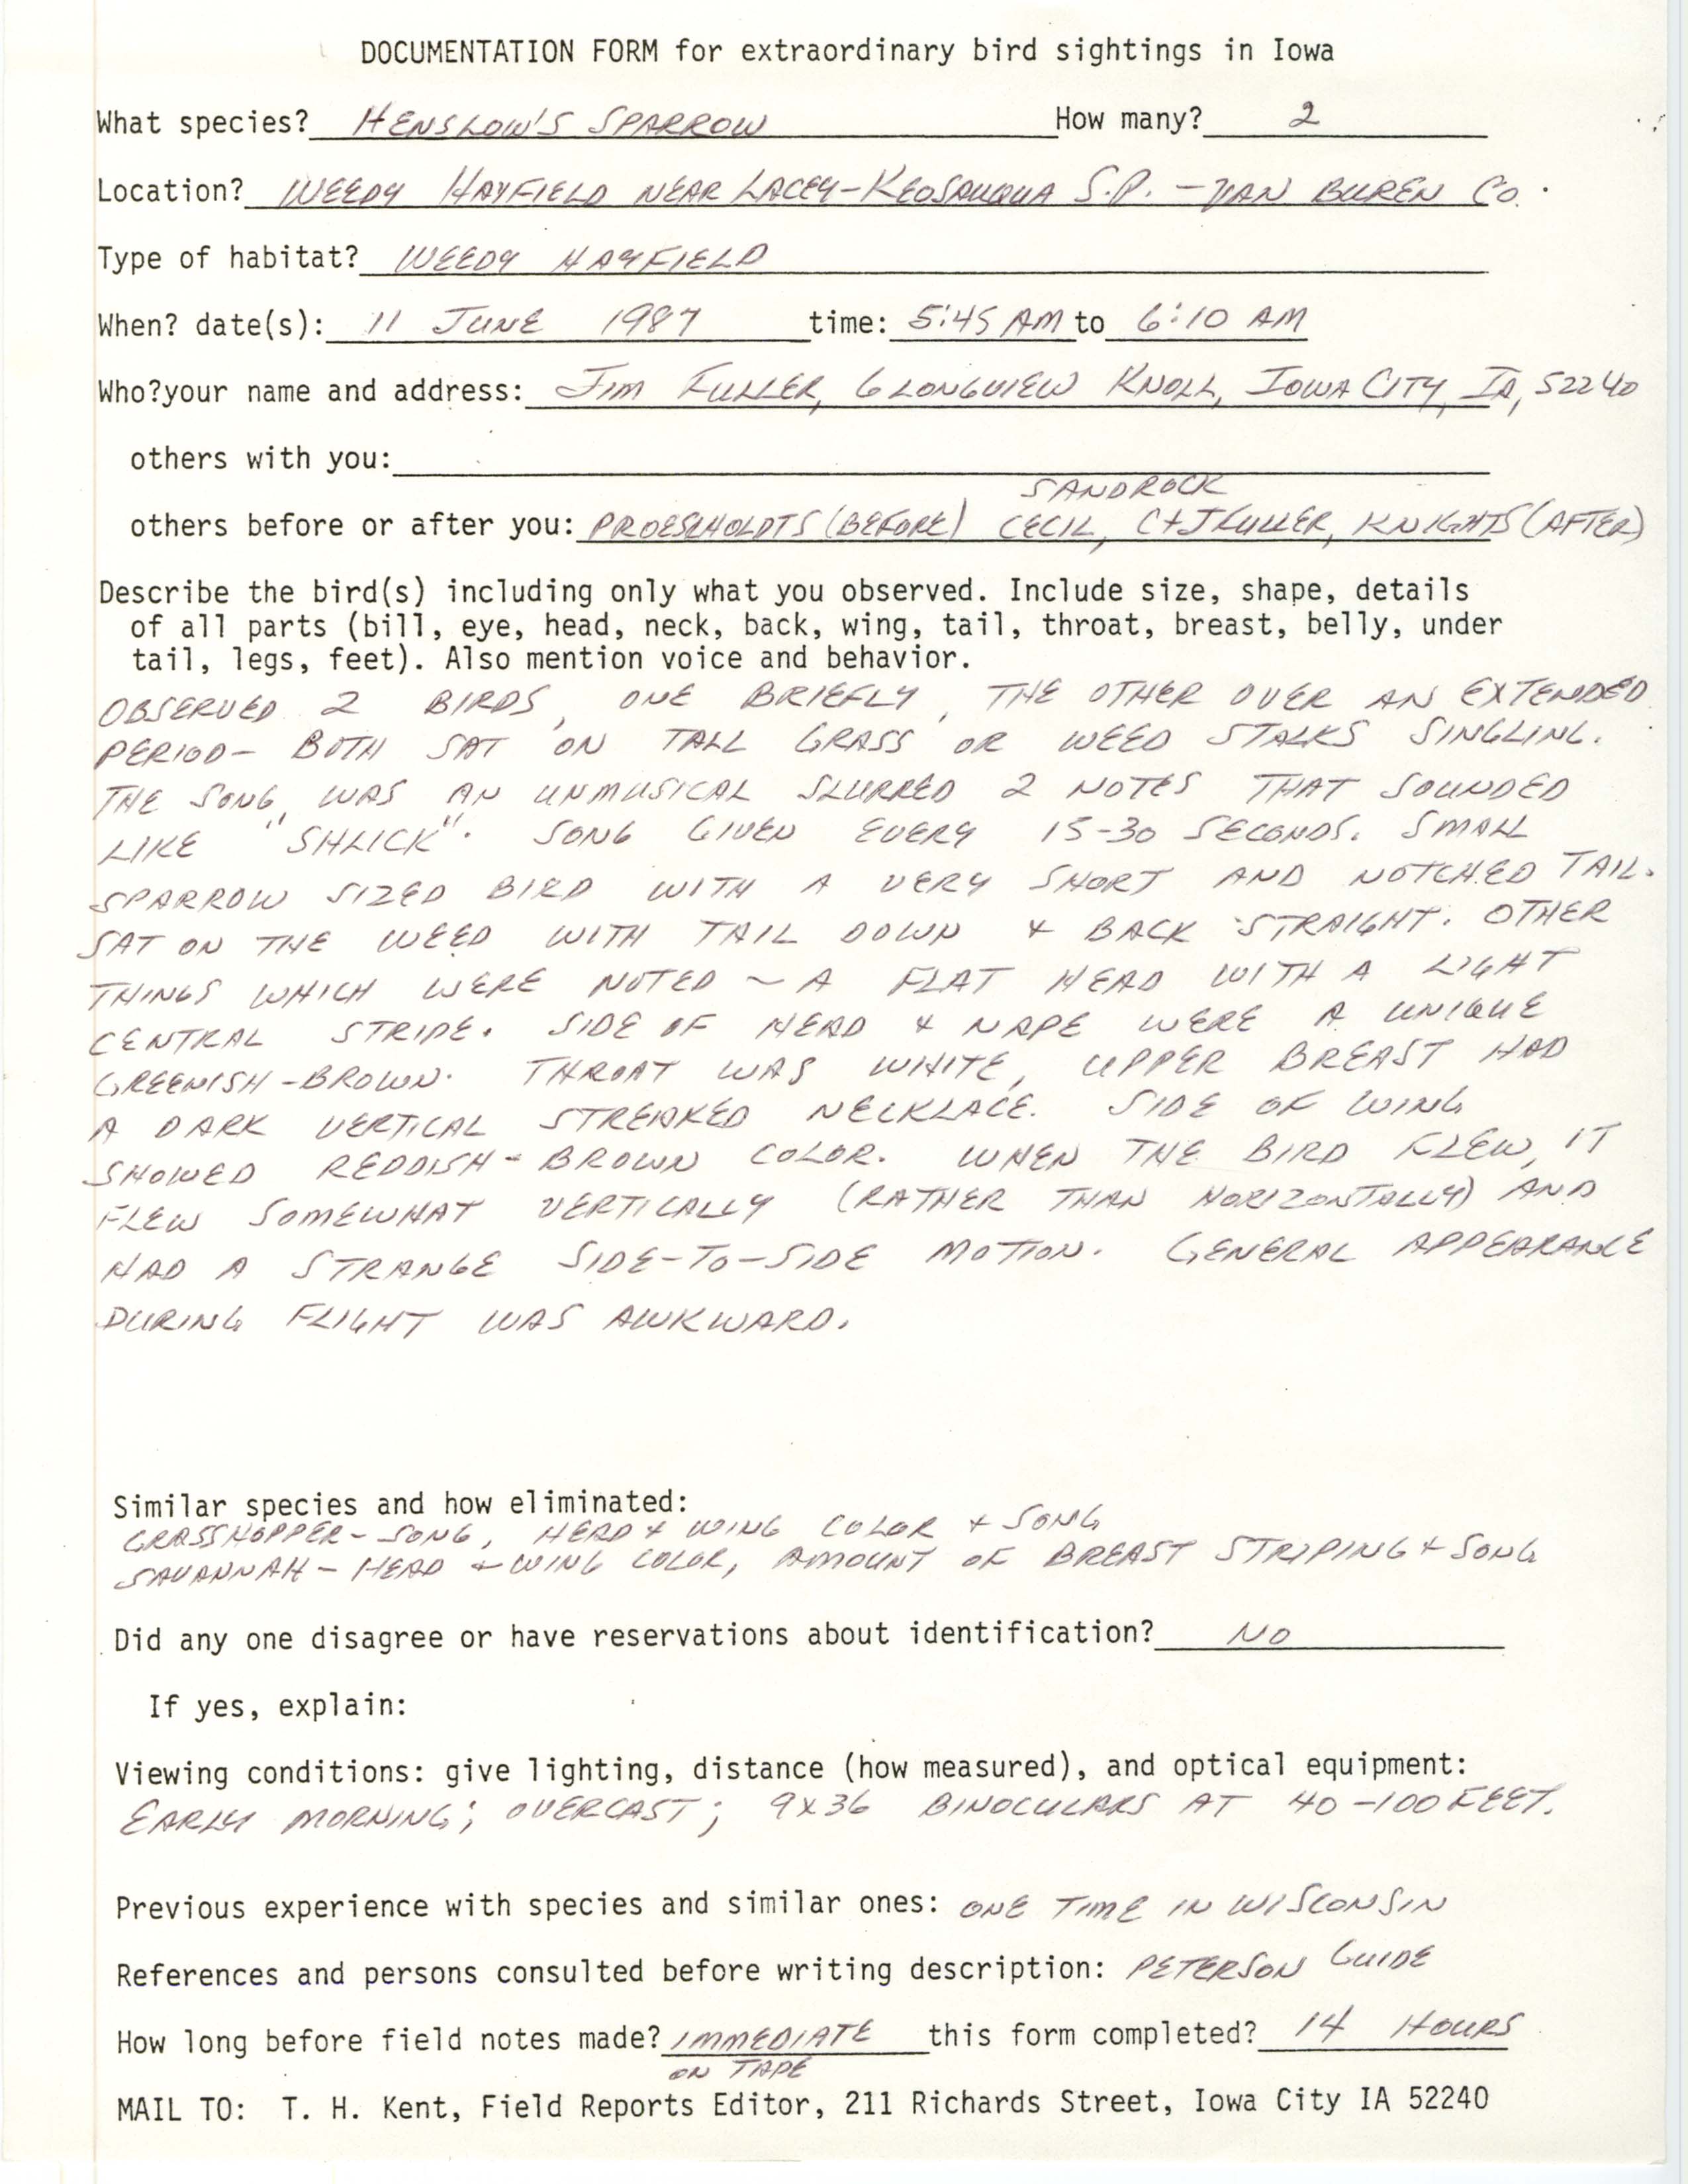 Rare bird documentation form for Henslow's Sparrow near Lacey-Keosauqua State Park, 1987